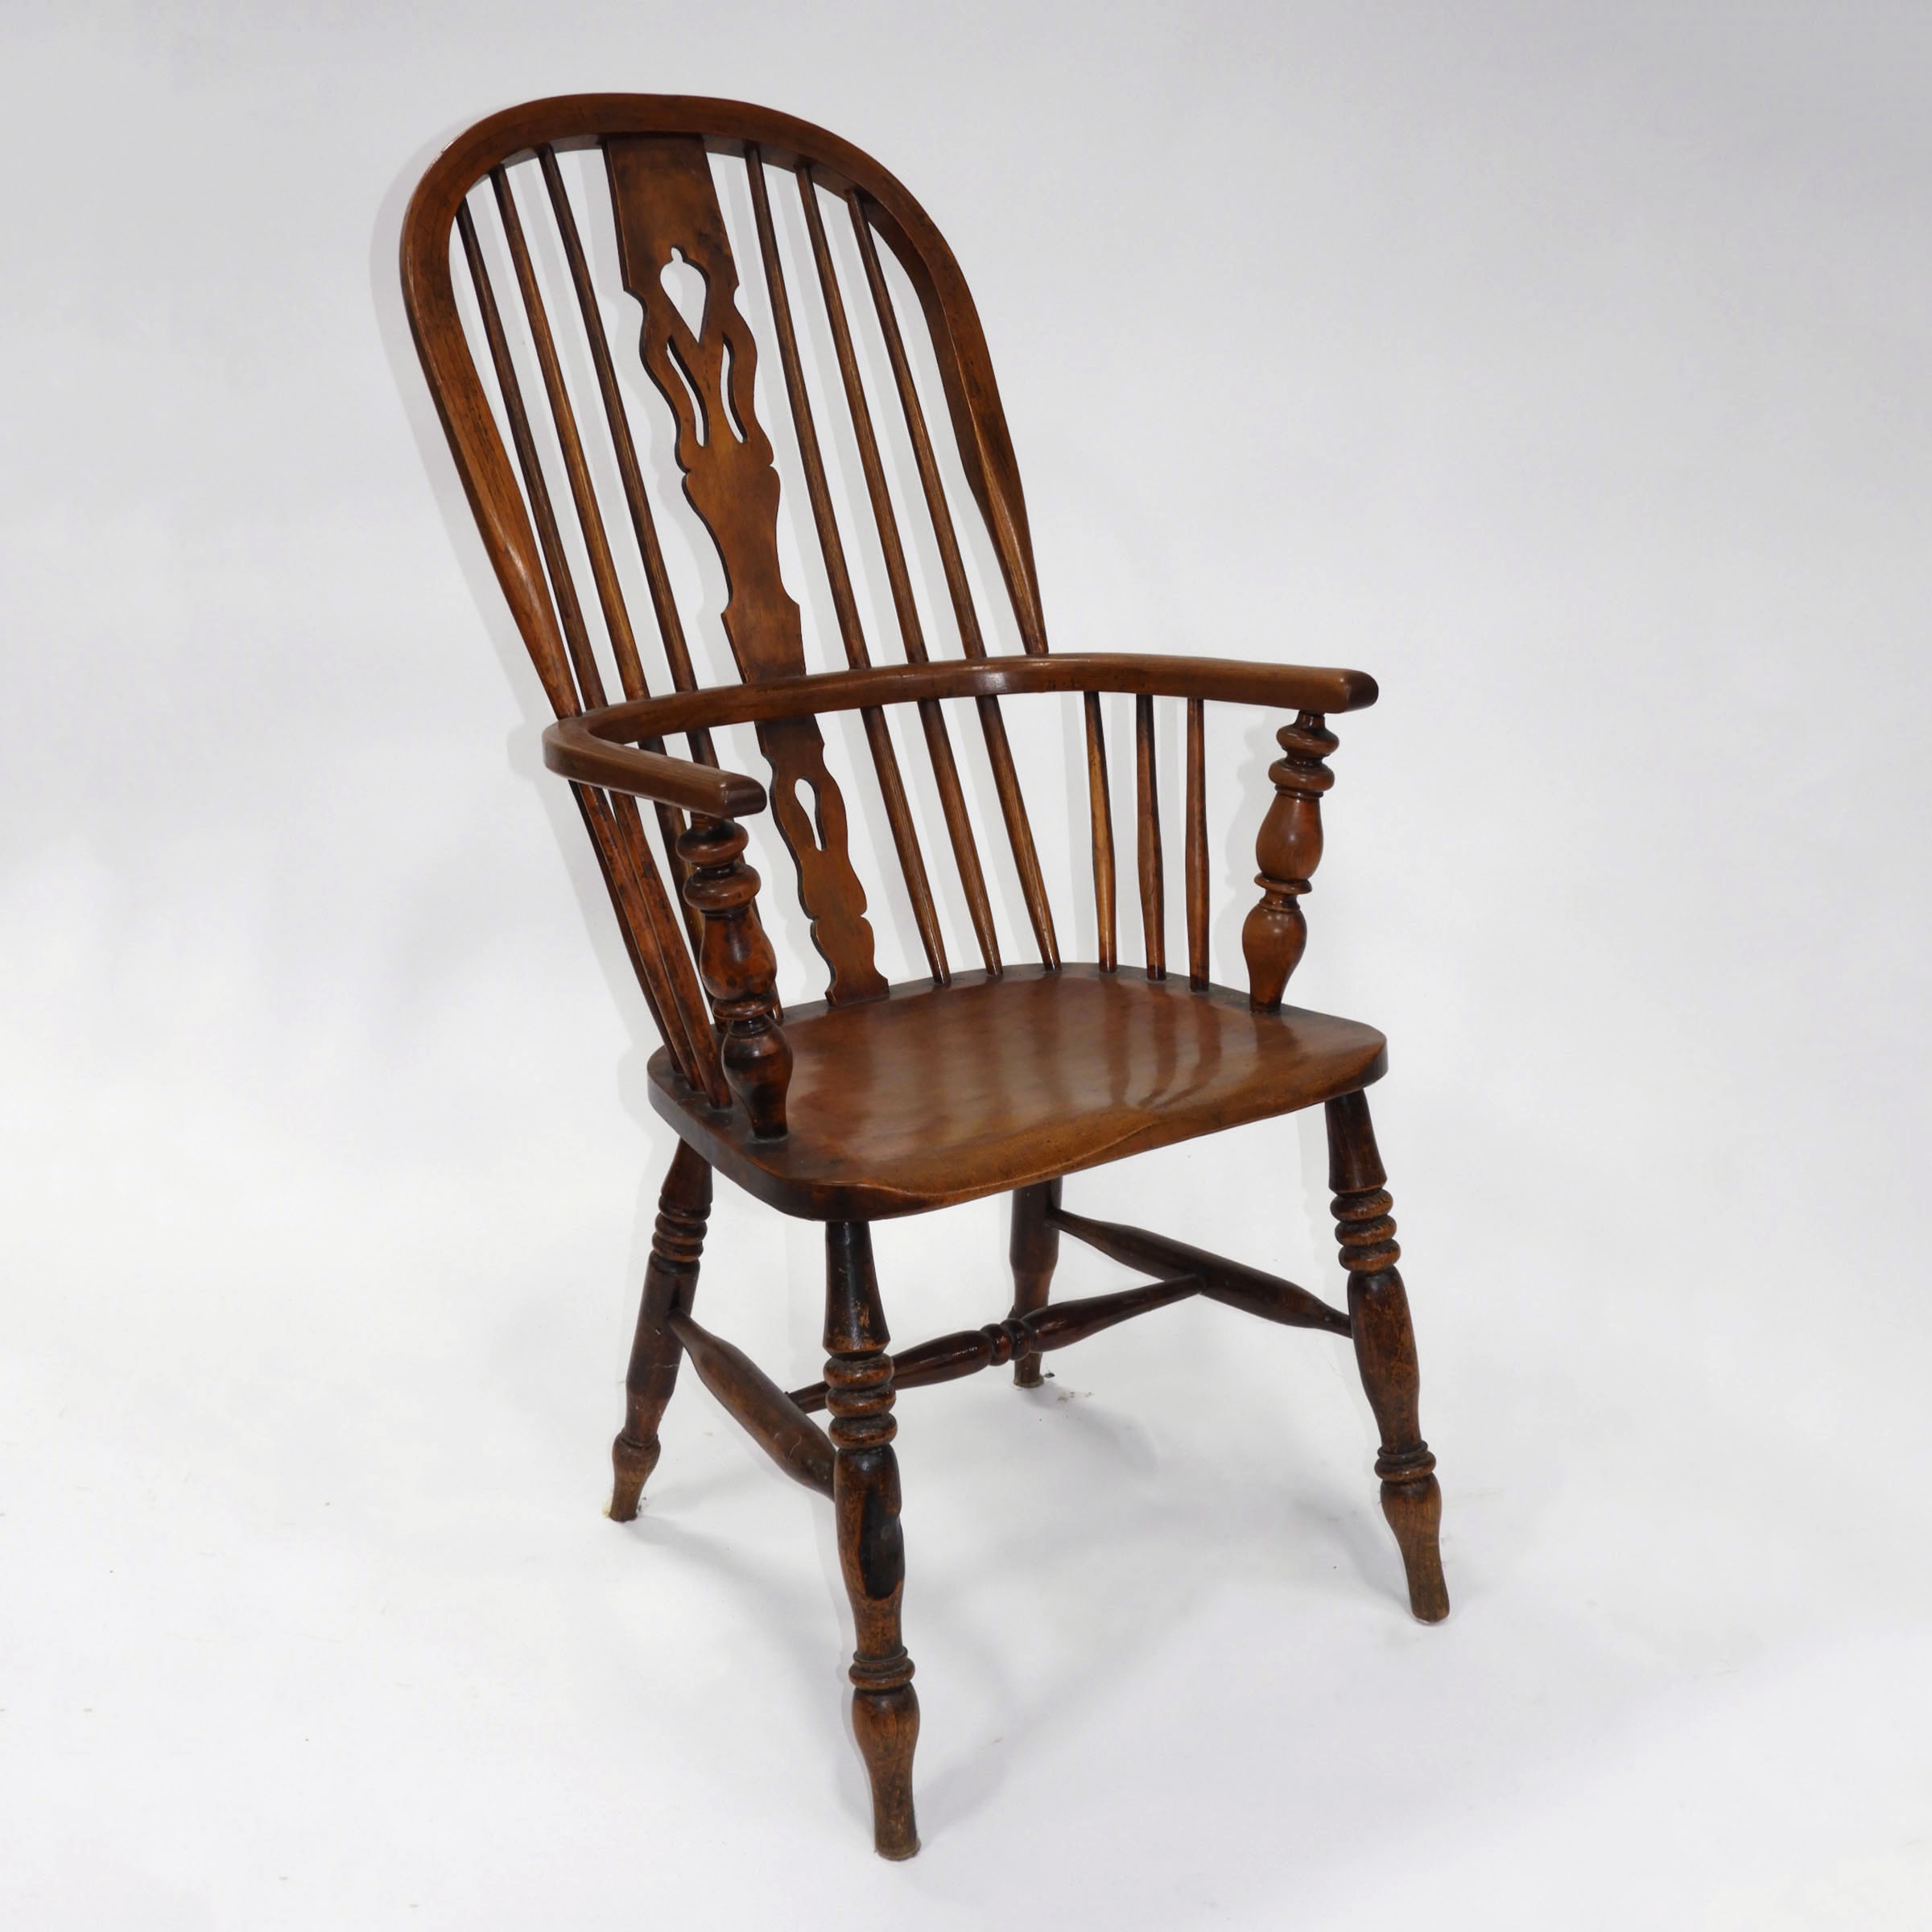 English Windsor Armchair, late 19th century